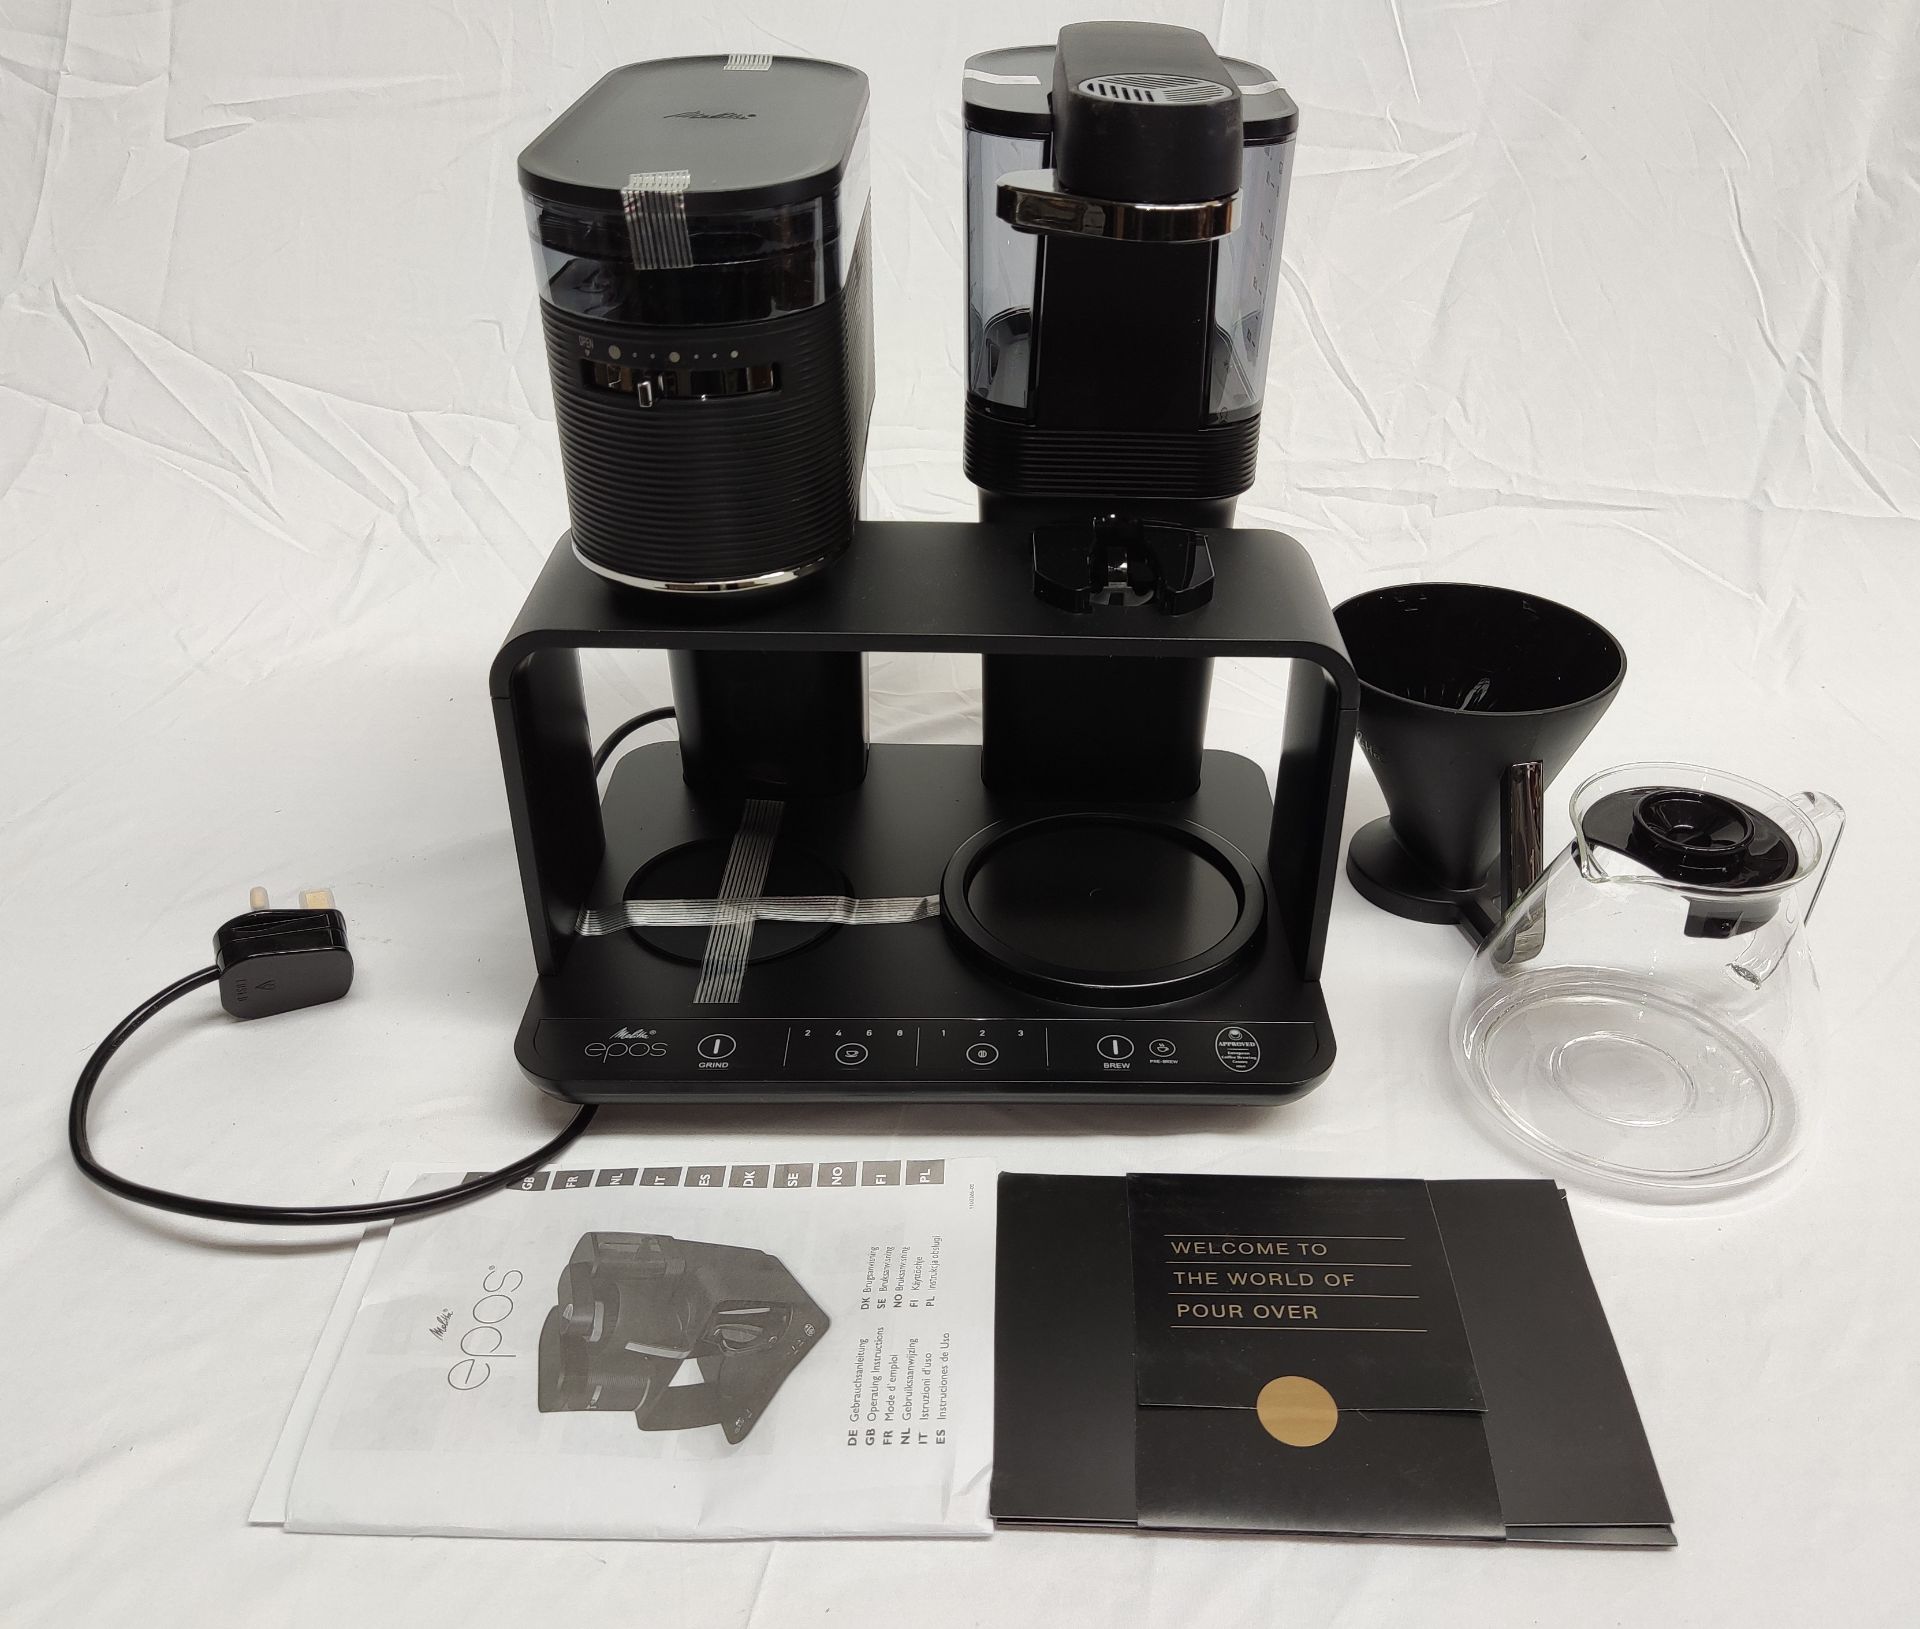 1 x MELITTA Epos Coffee Machine With Grinder - Boxed - Original RRP £399 - Ref: 7129012/HJL350/C19/ - Image 3 of 14